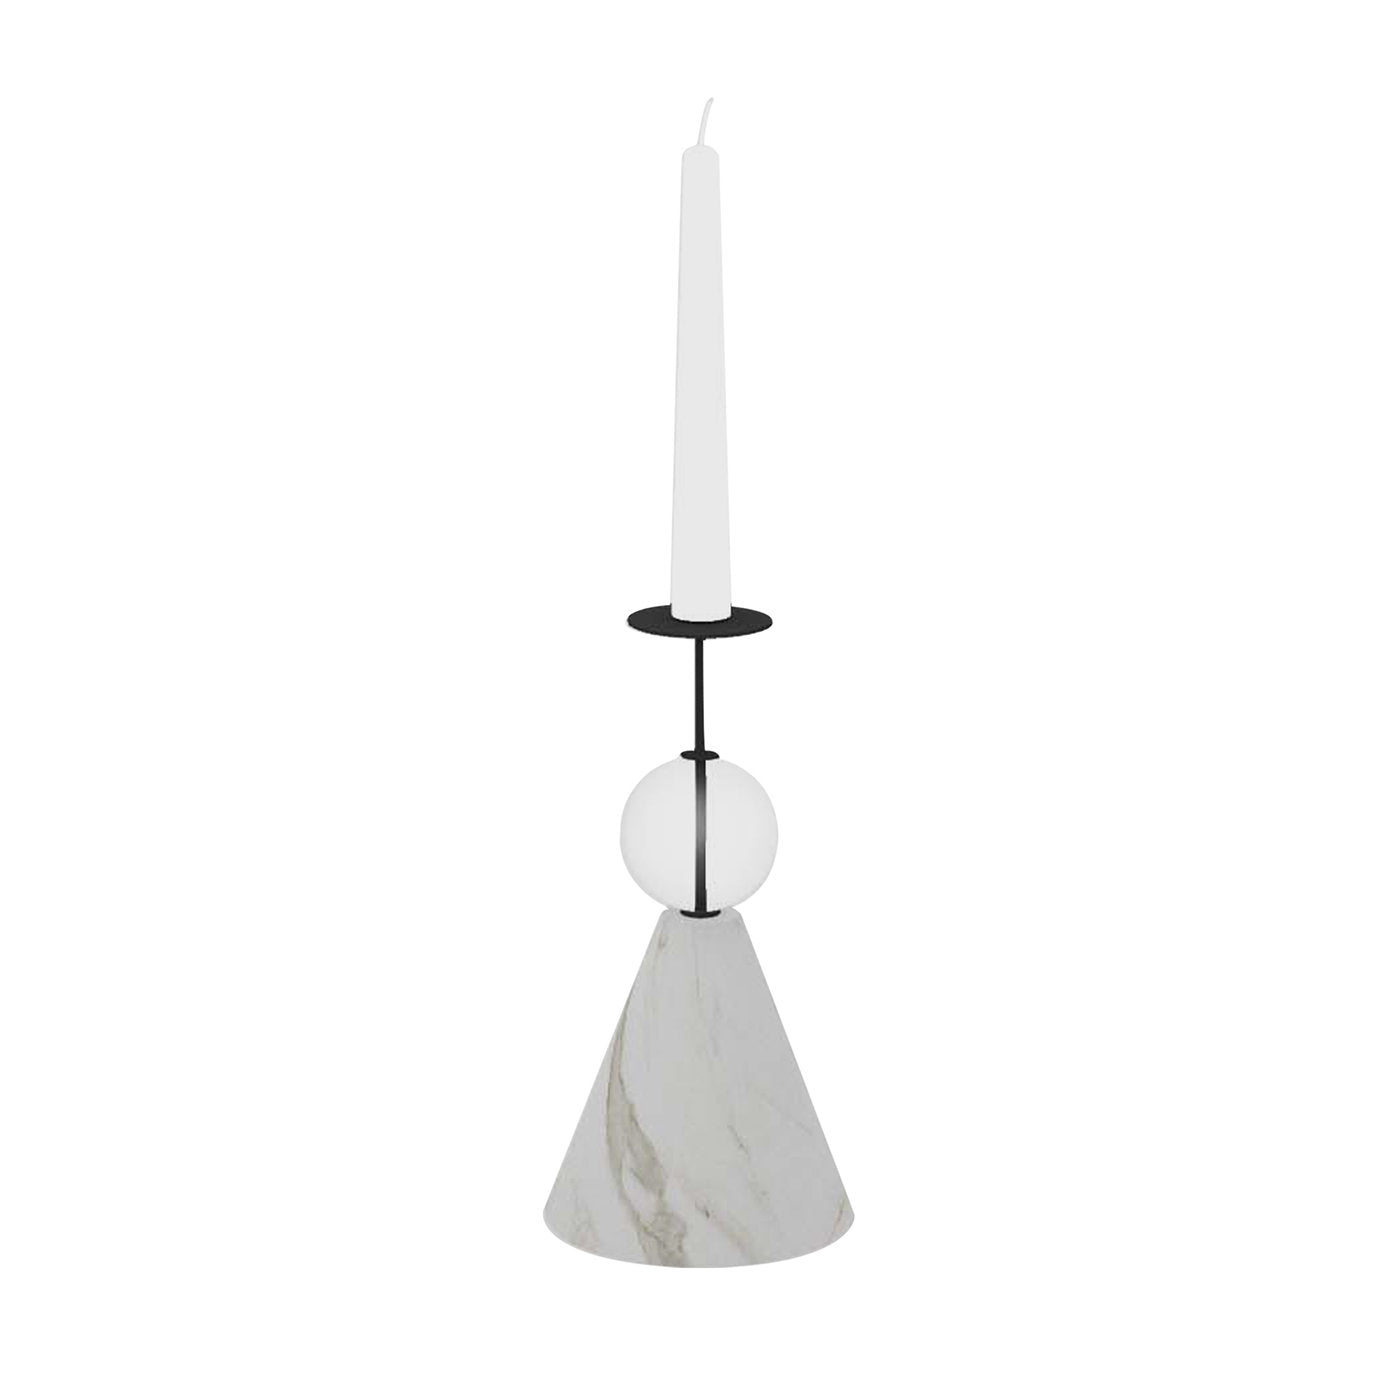 Raccontami White Carrara, Black and Transparent Candle Holder - Main view